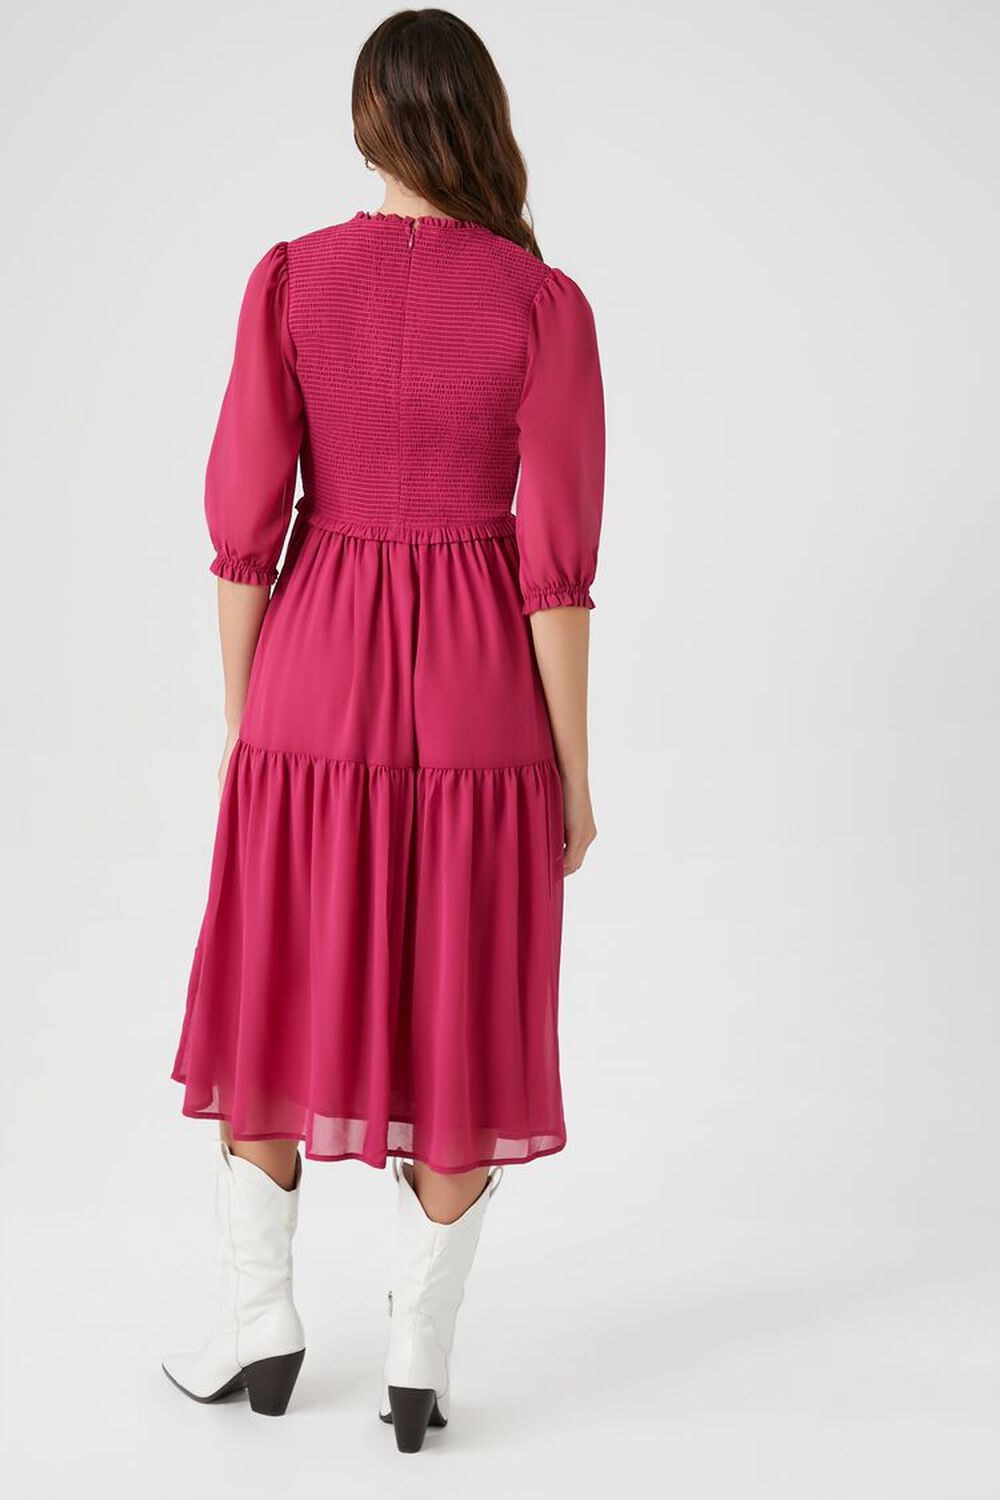 FUCHSIA Smocked Chiffon Peasant-Sleeve Dress, image 3